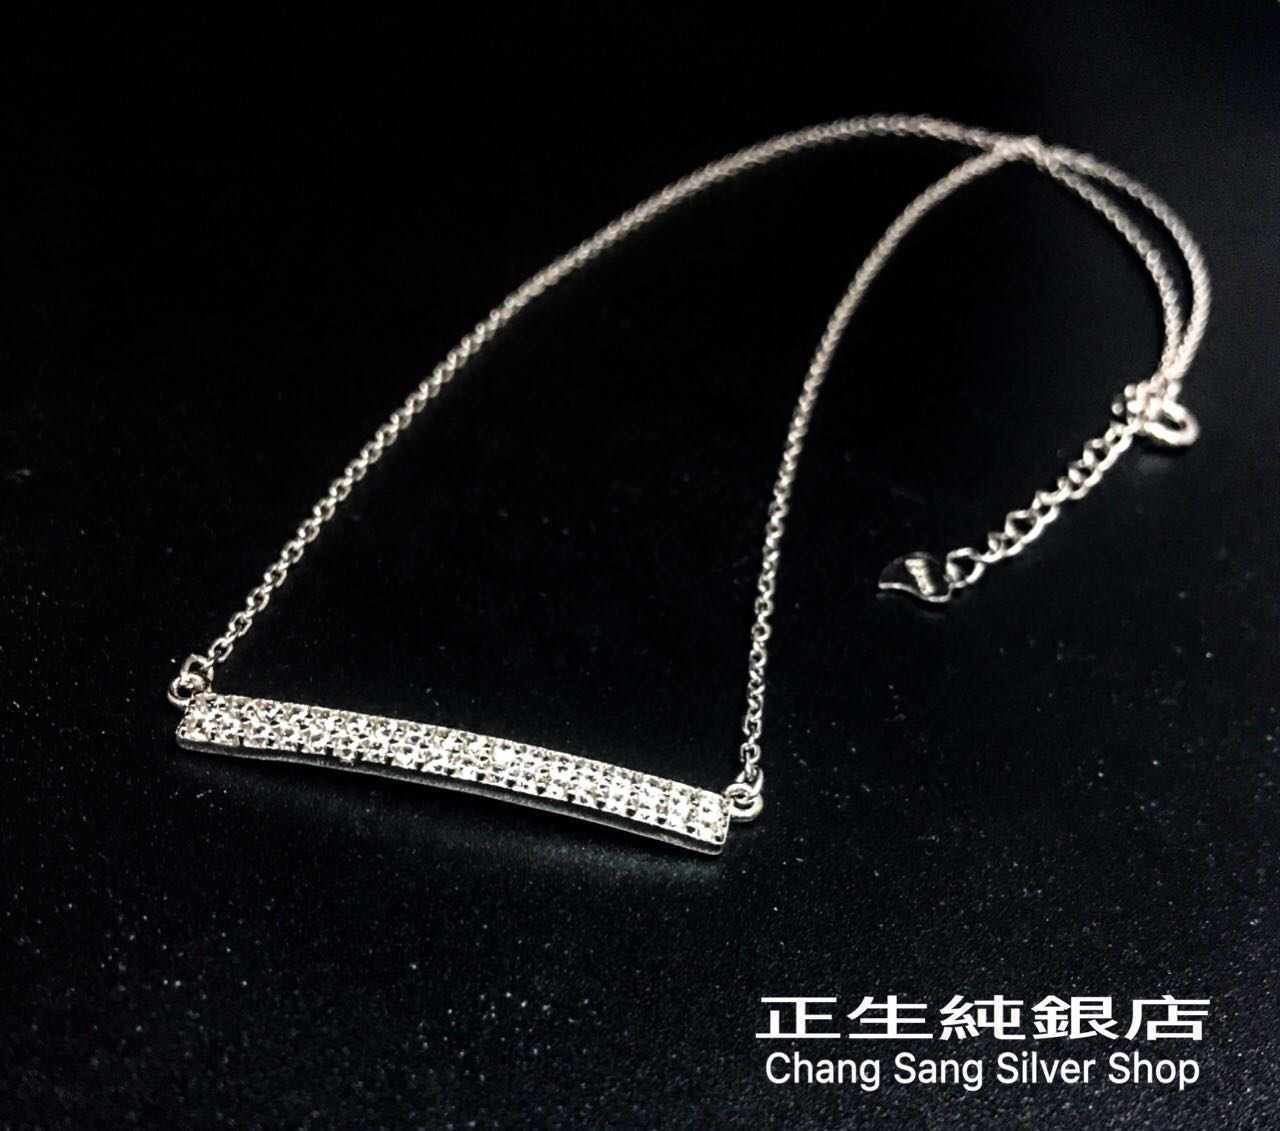 Exquisite CZ necklace series